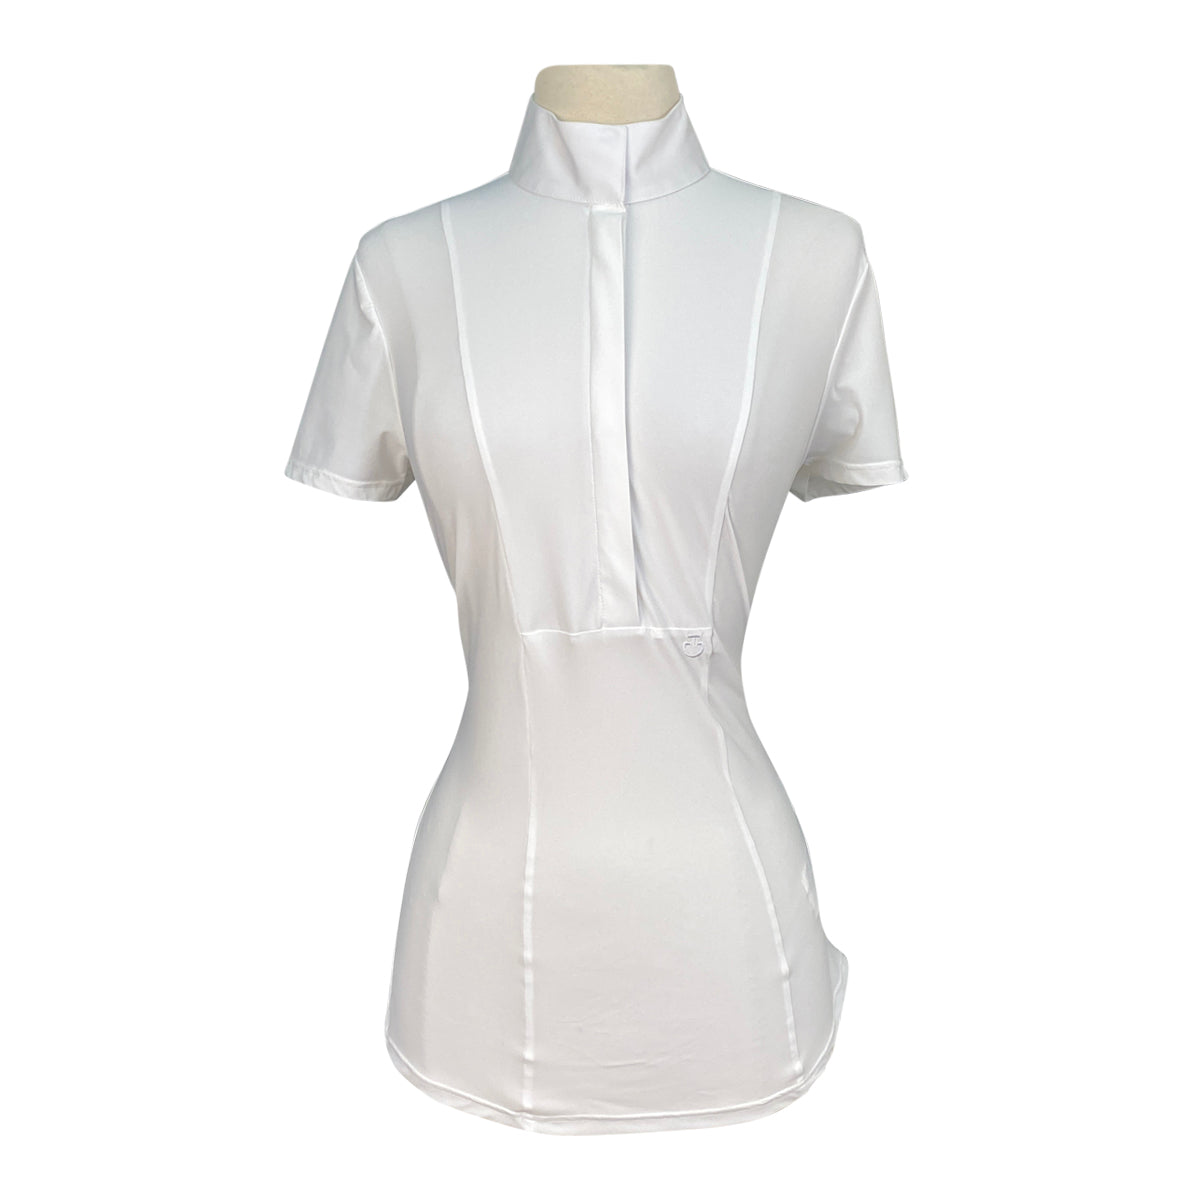 Cavalleria Toscana Jersey Short Sleeve Show Shirt w/Poplin Bib in White